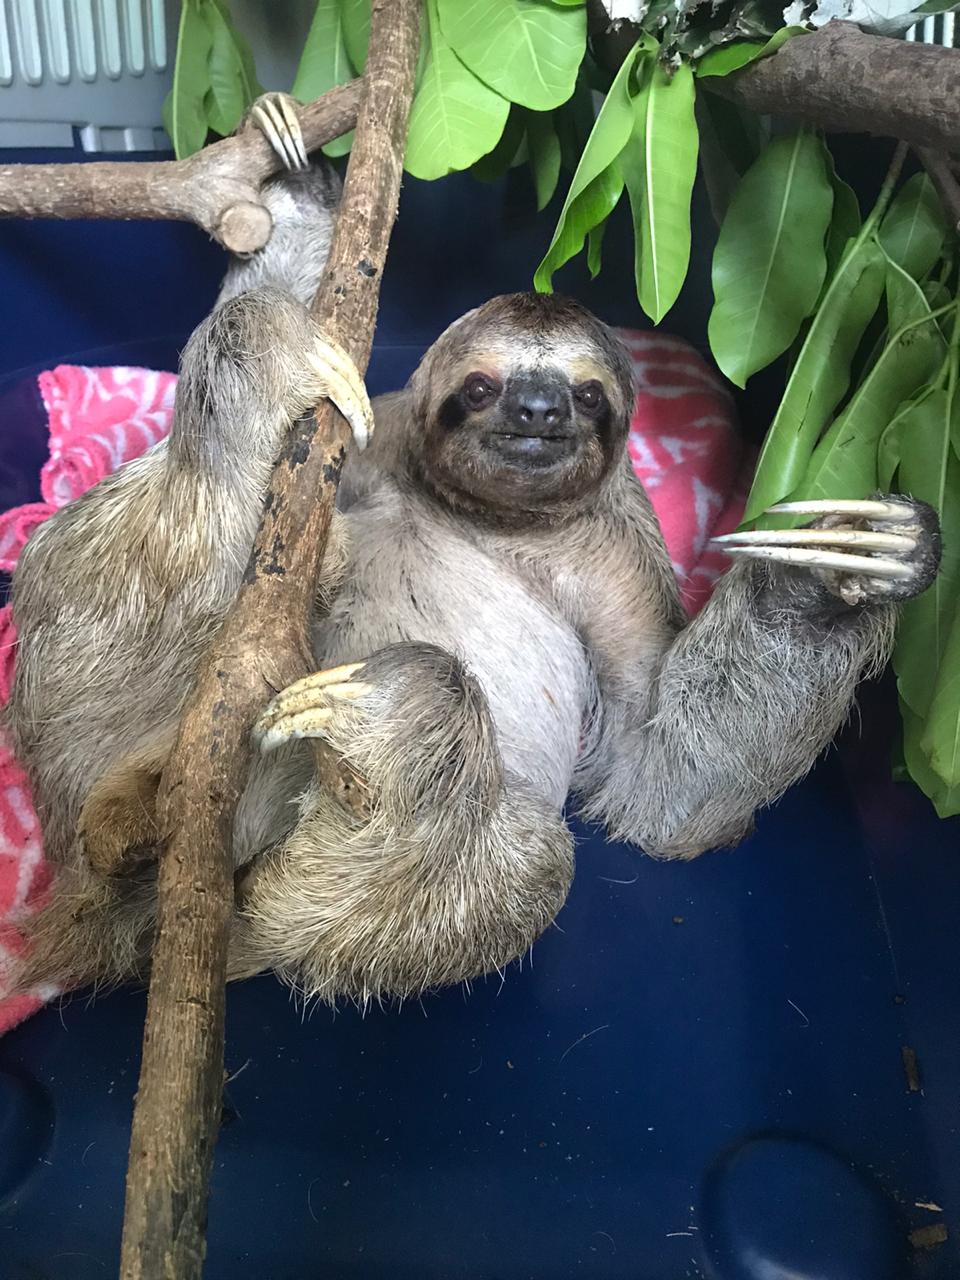 Alan the three-fingered sloth